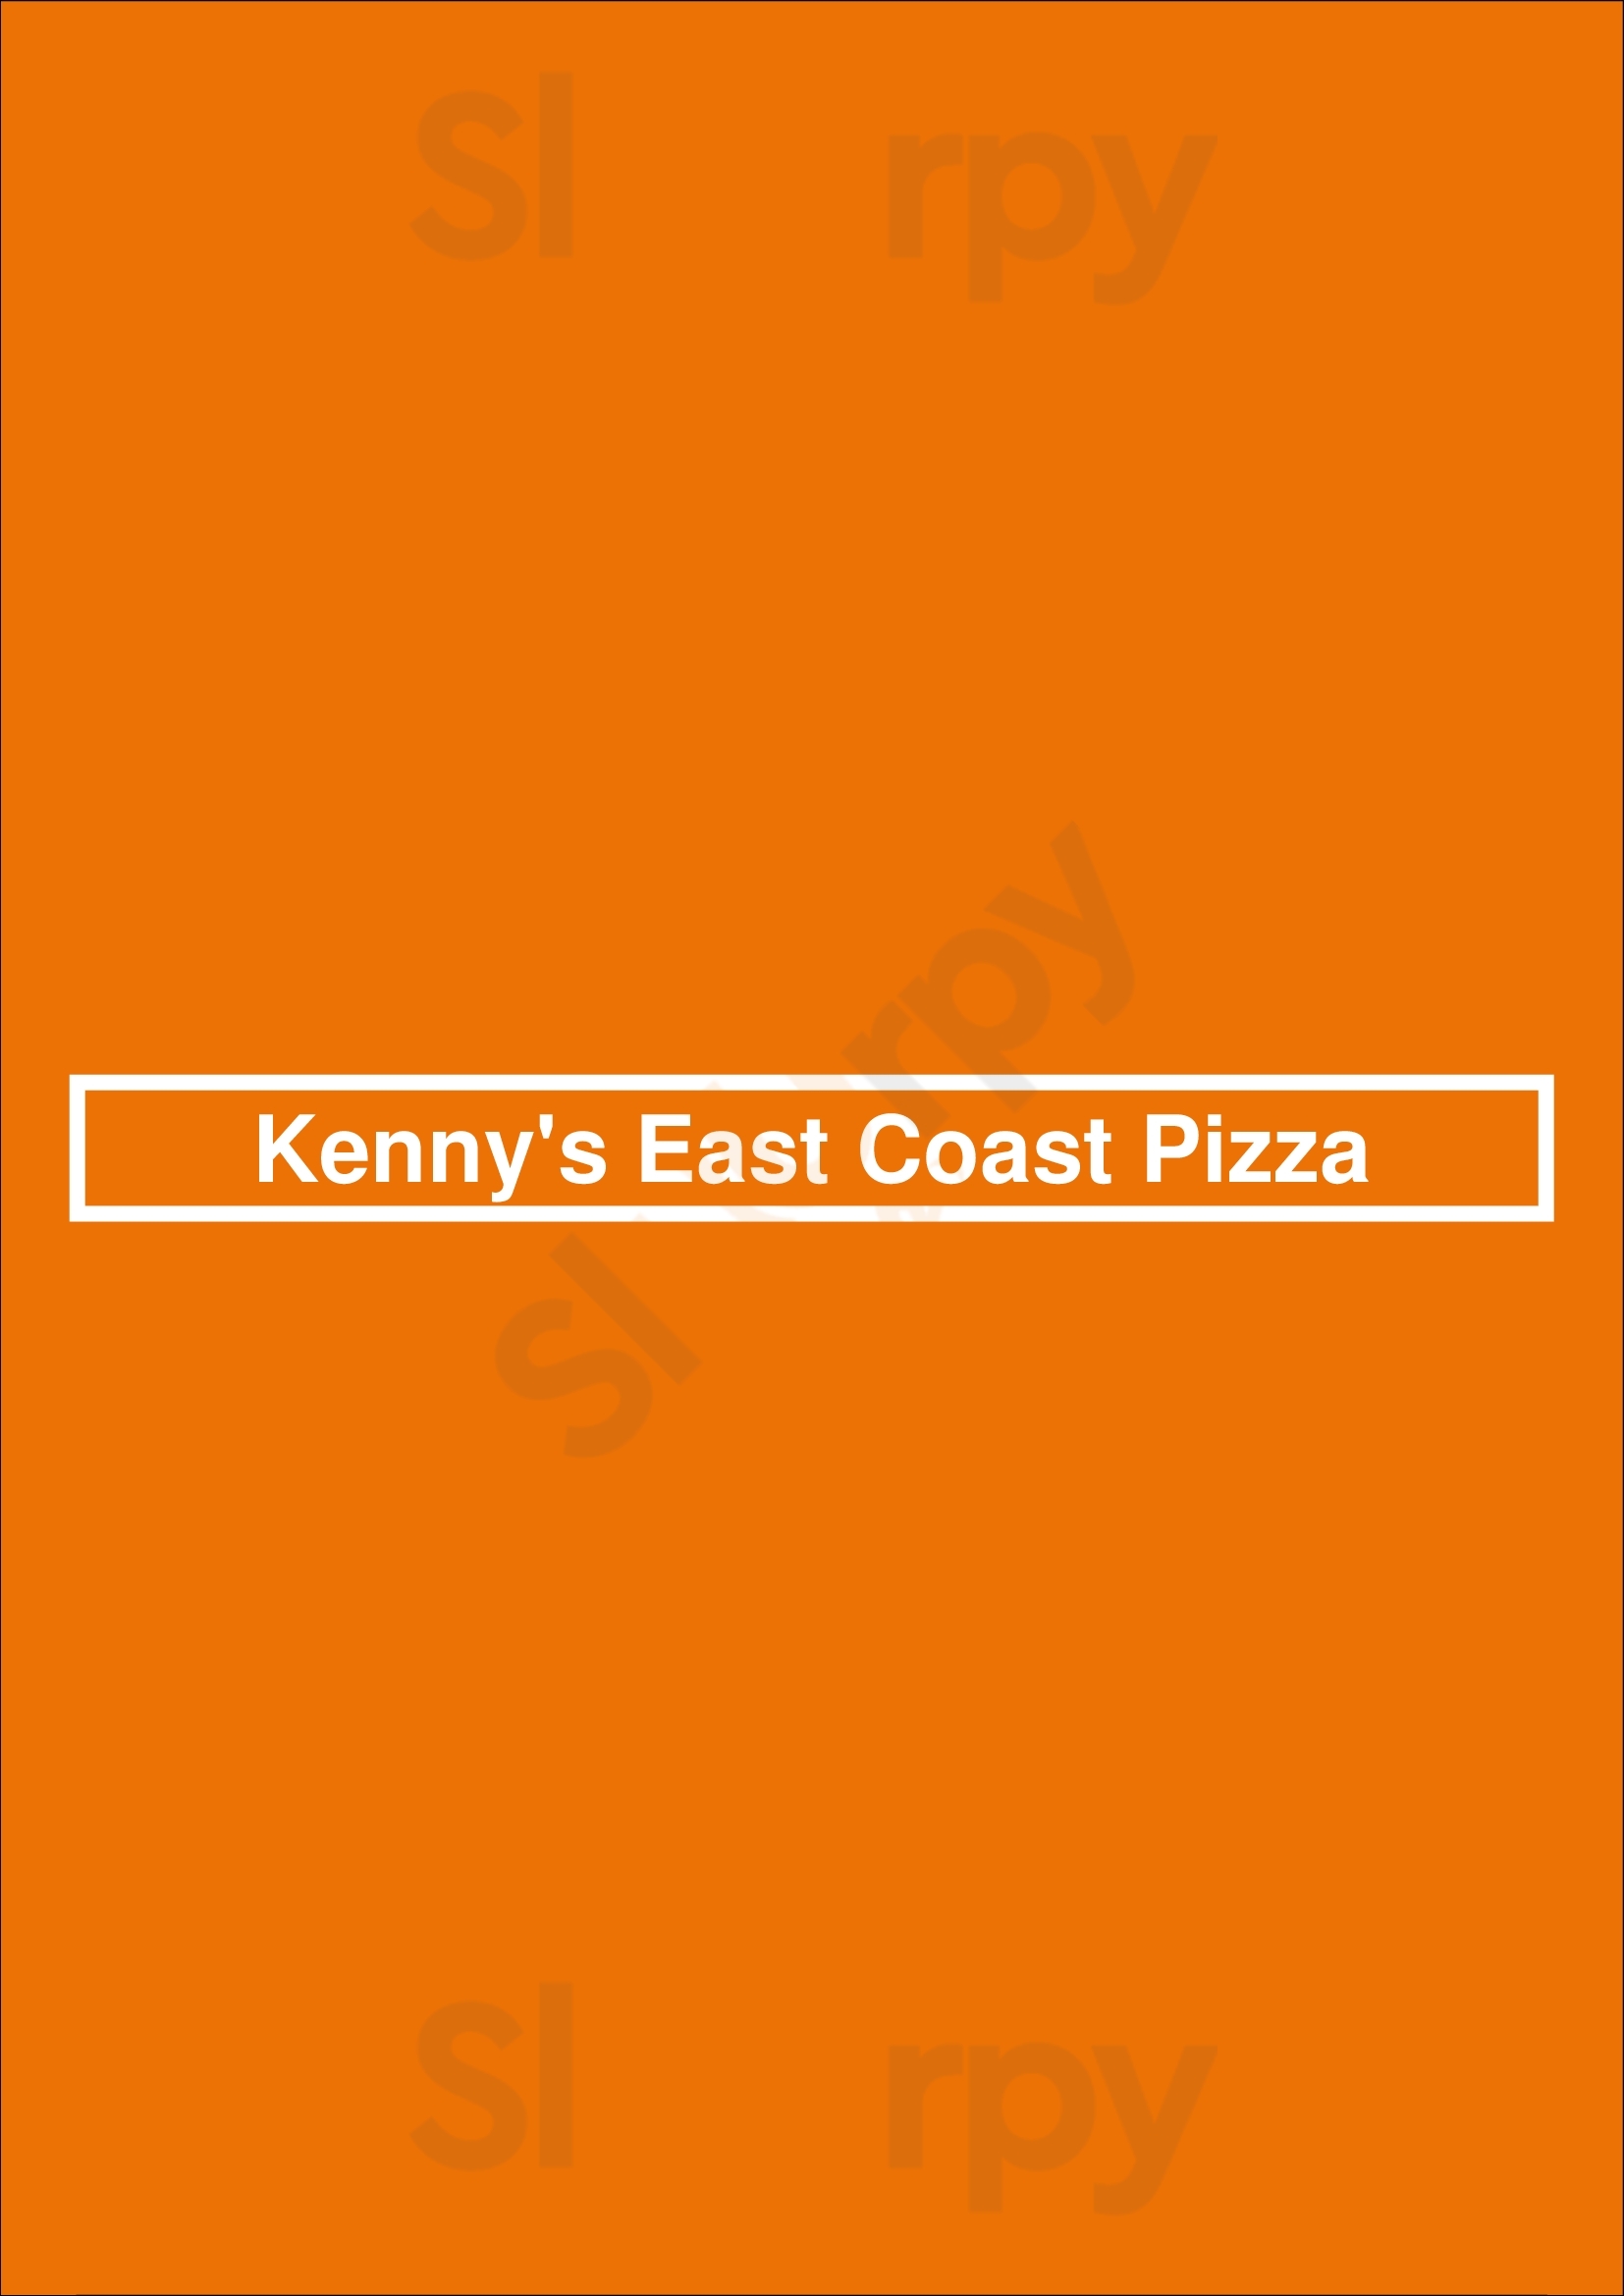 Kenny's East Coast Pizza Plano Menu - 1